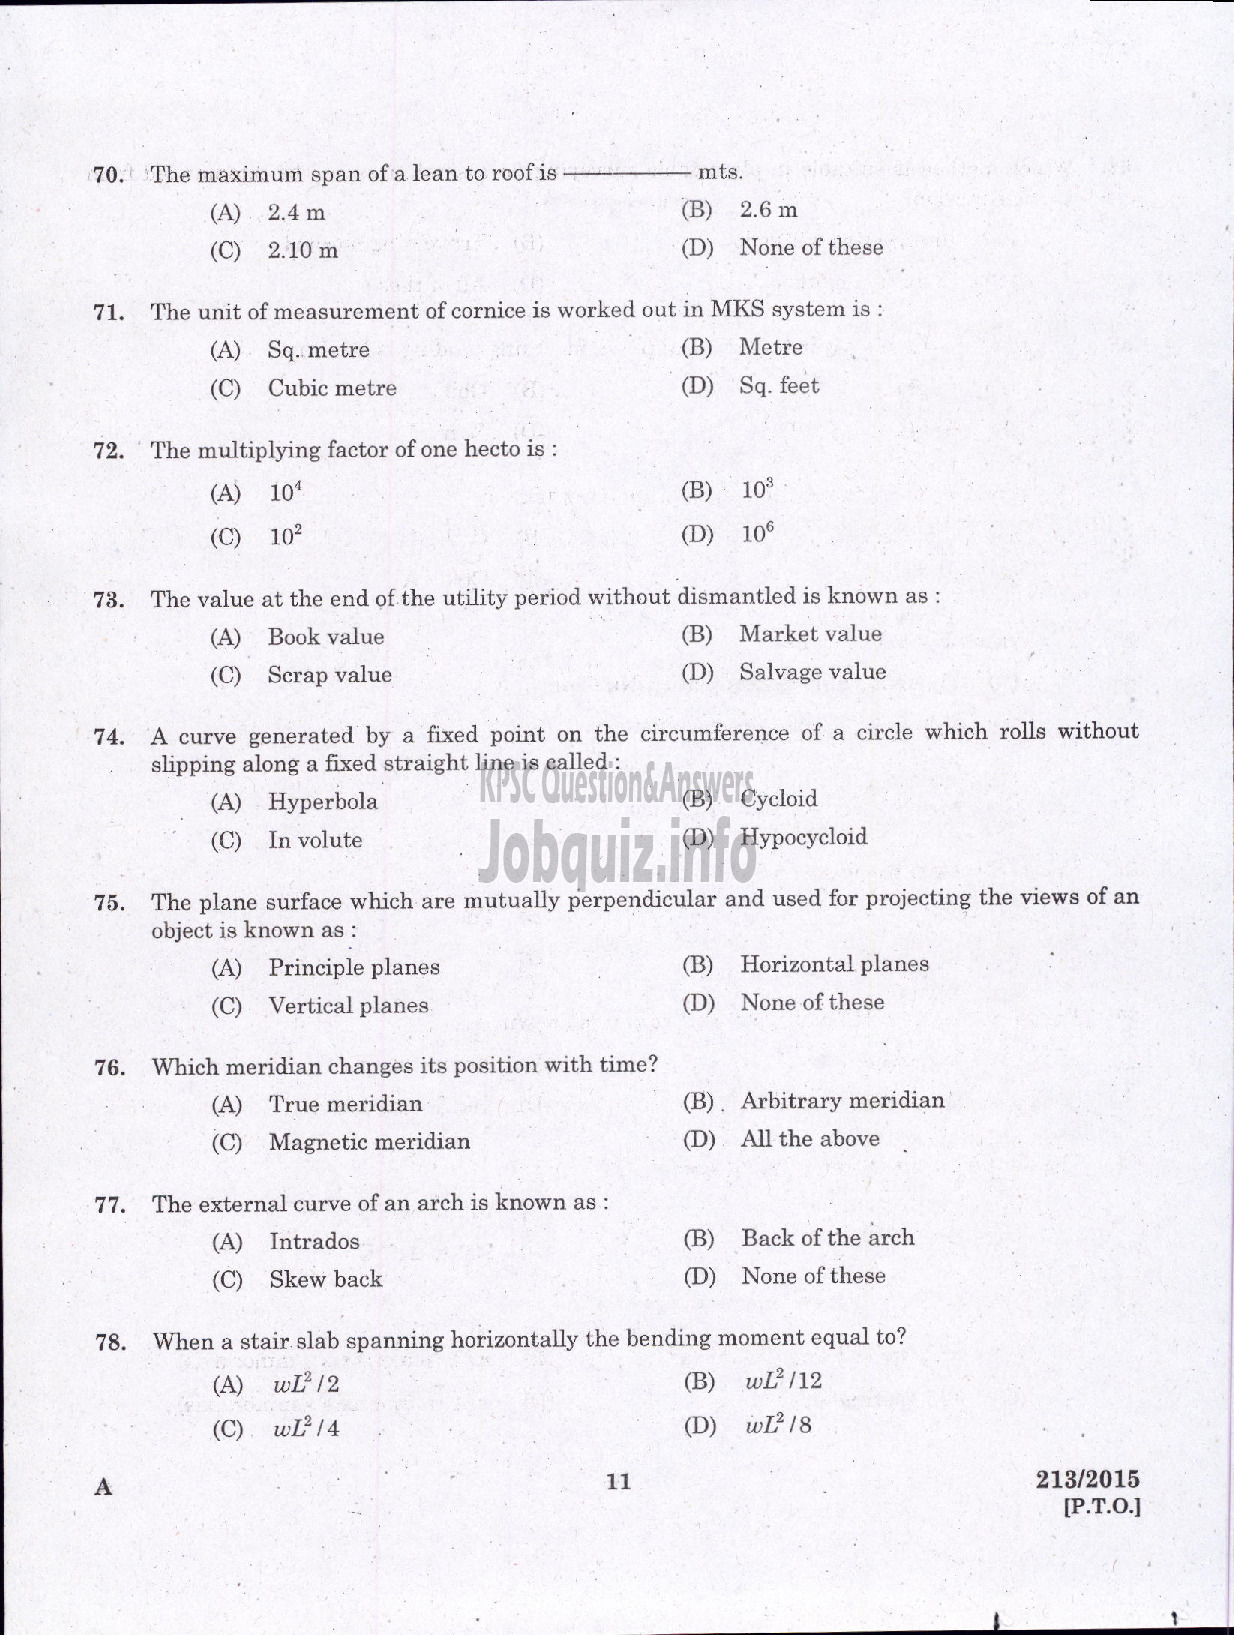 Kerala PSC Question Paper - SECOND GRADE OVERSEER/ESCOND GRADE DRAFTSMAN LOCALSELF GOVERNMENT-9